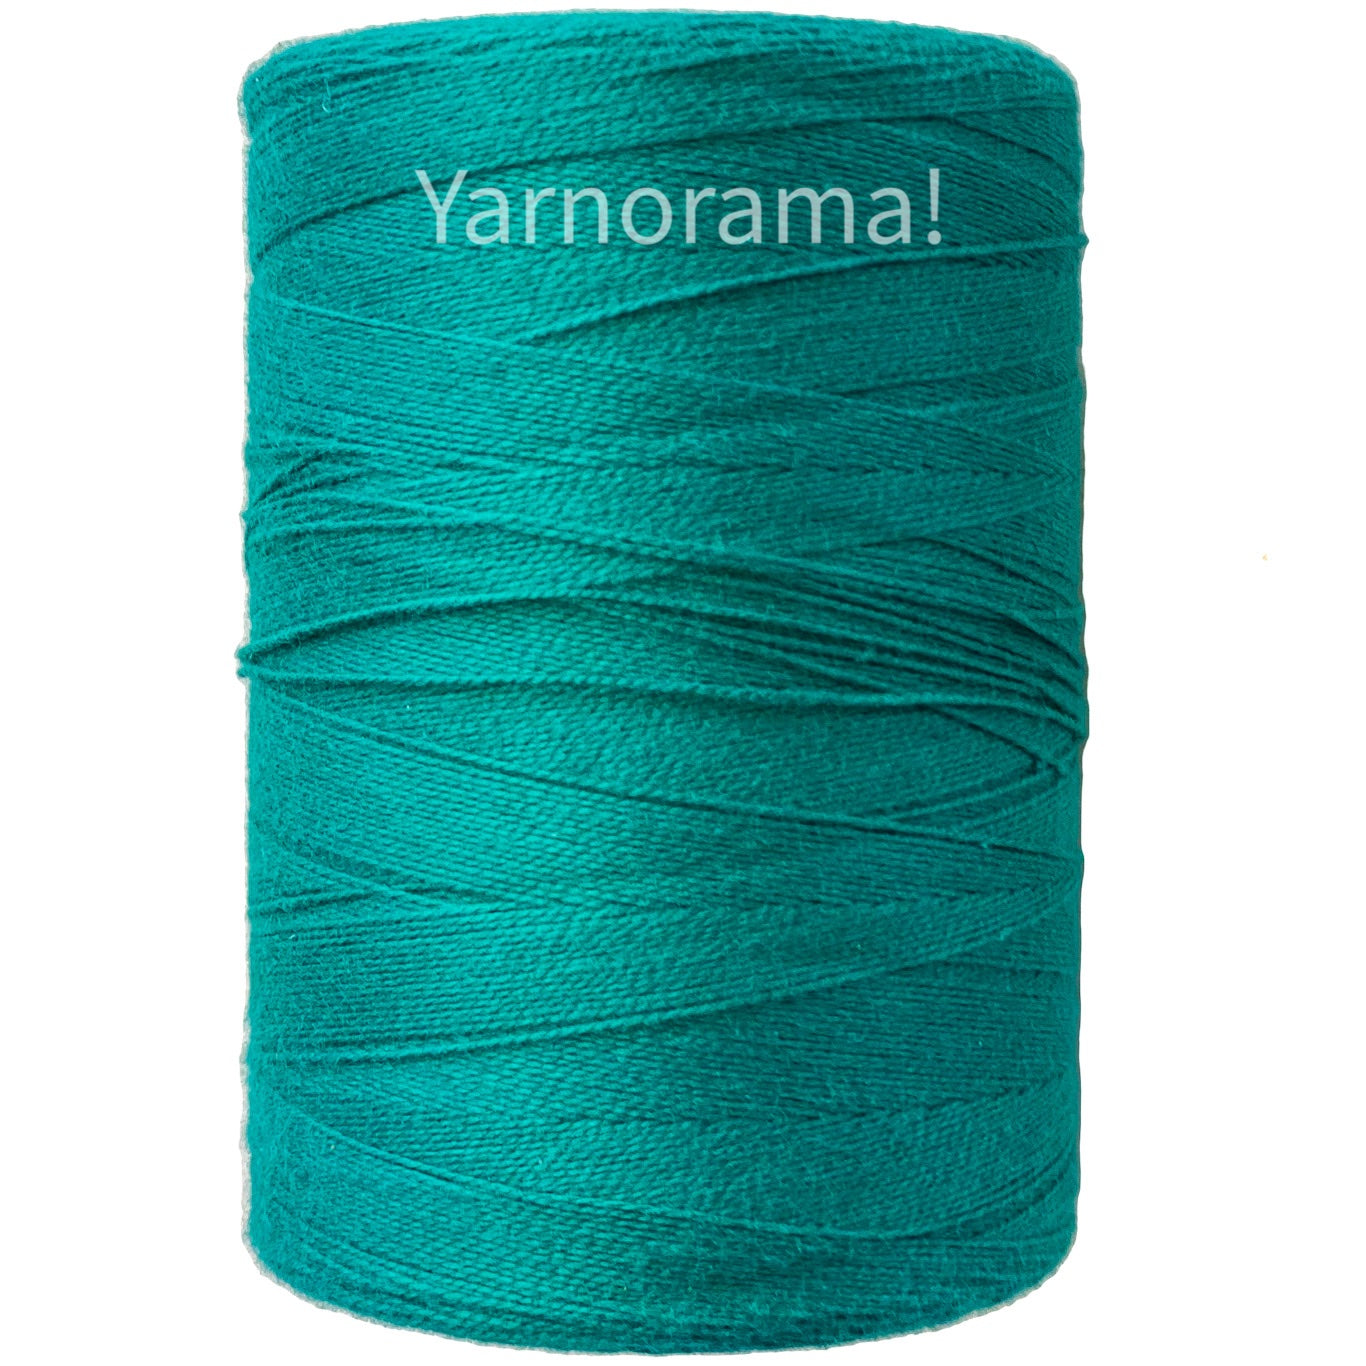 Gist Beam Organic Cotton Weaving Yarn – Sunshine Weaving